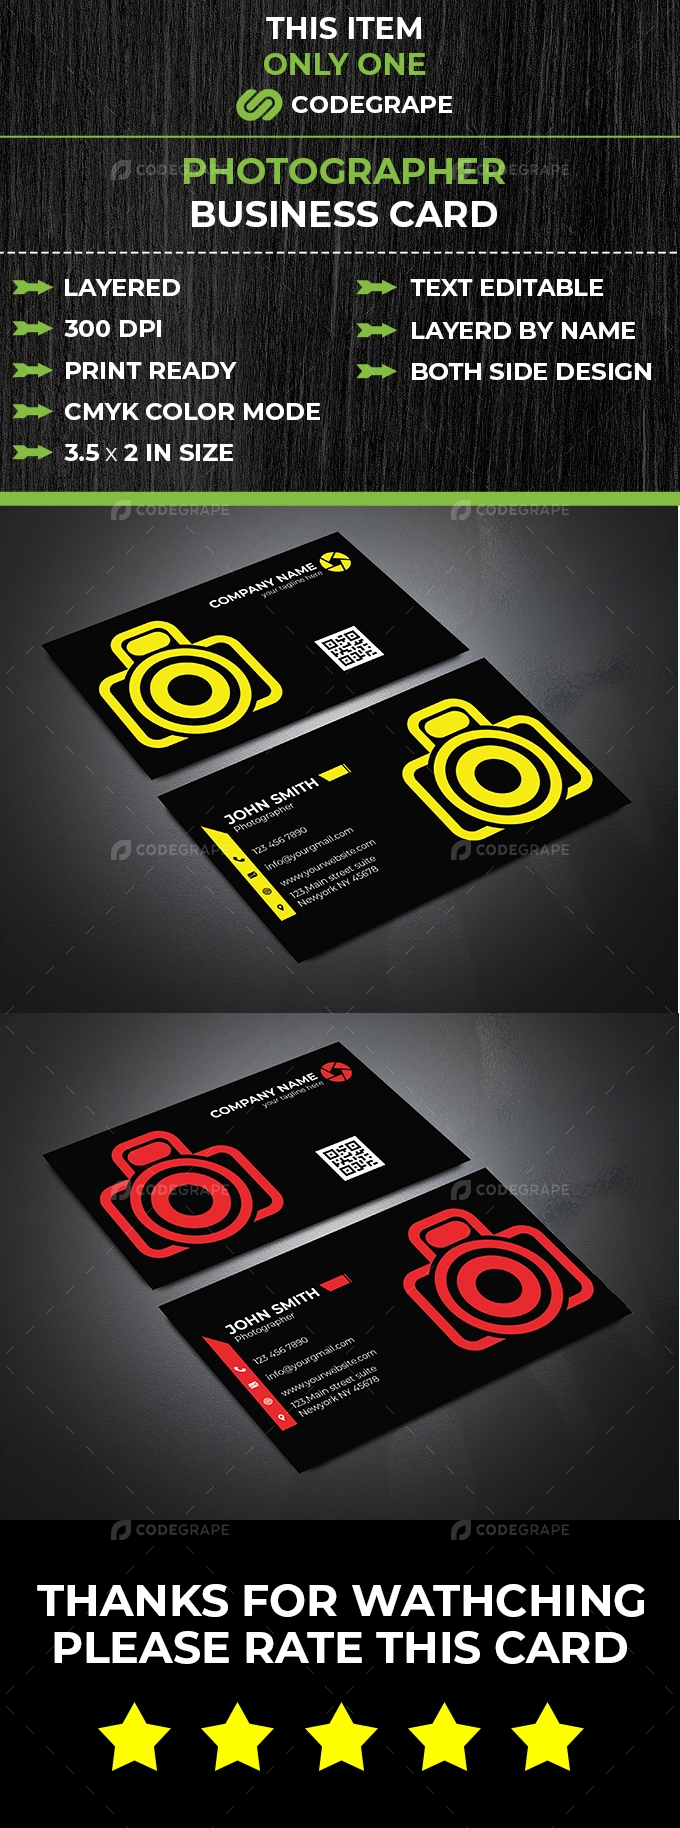 Photogrpher Business Card